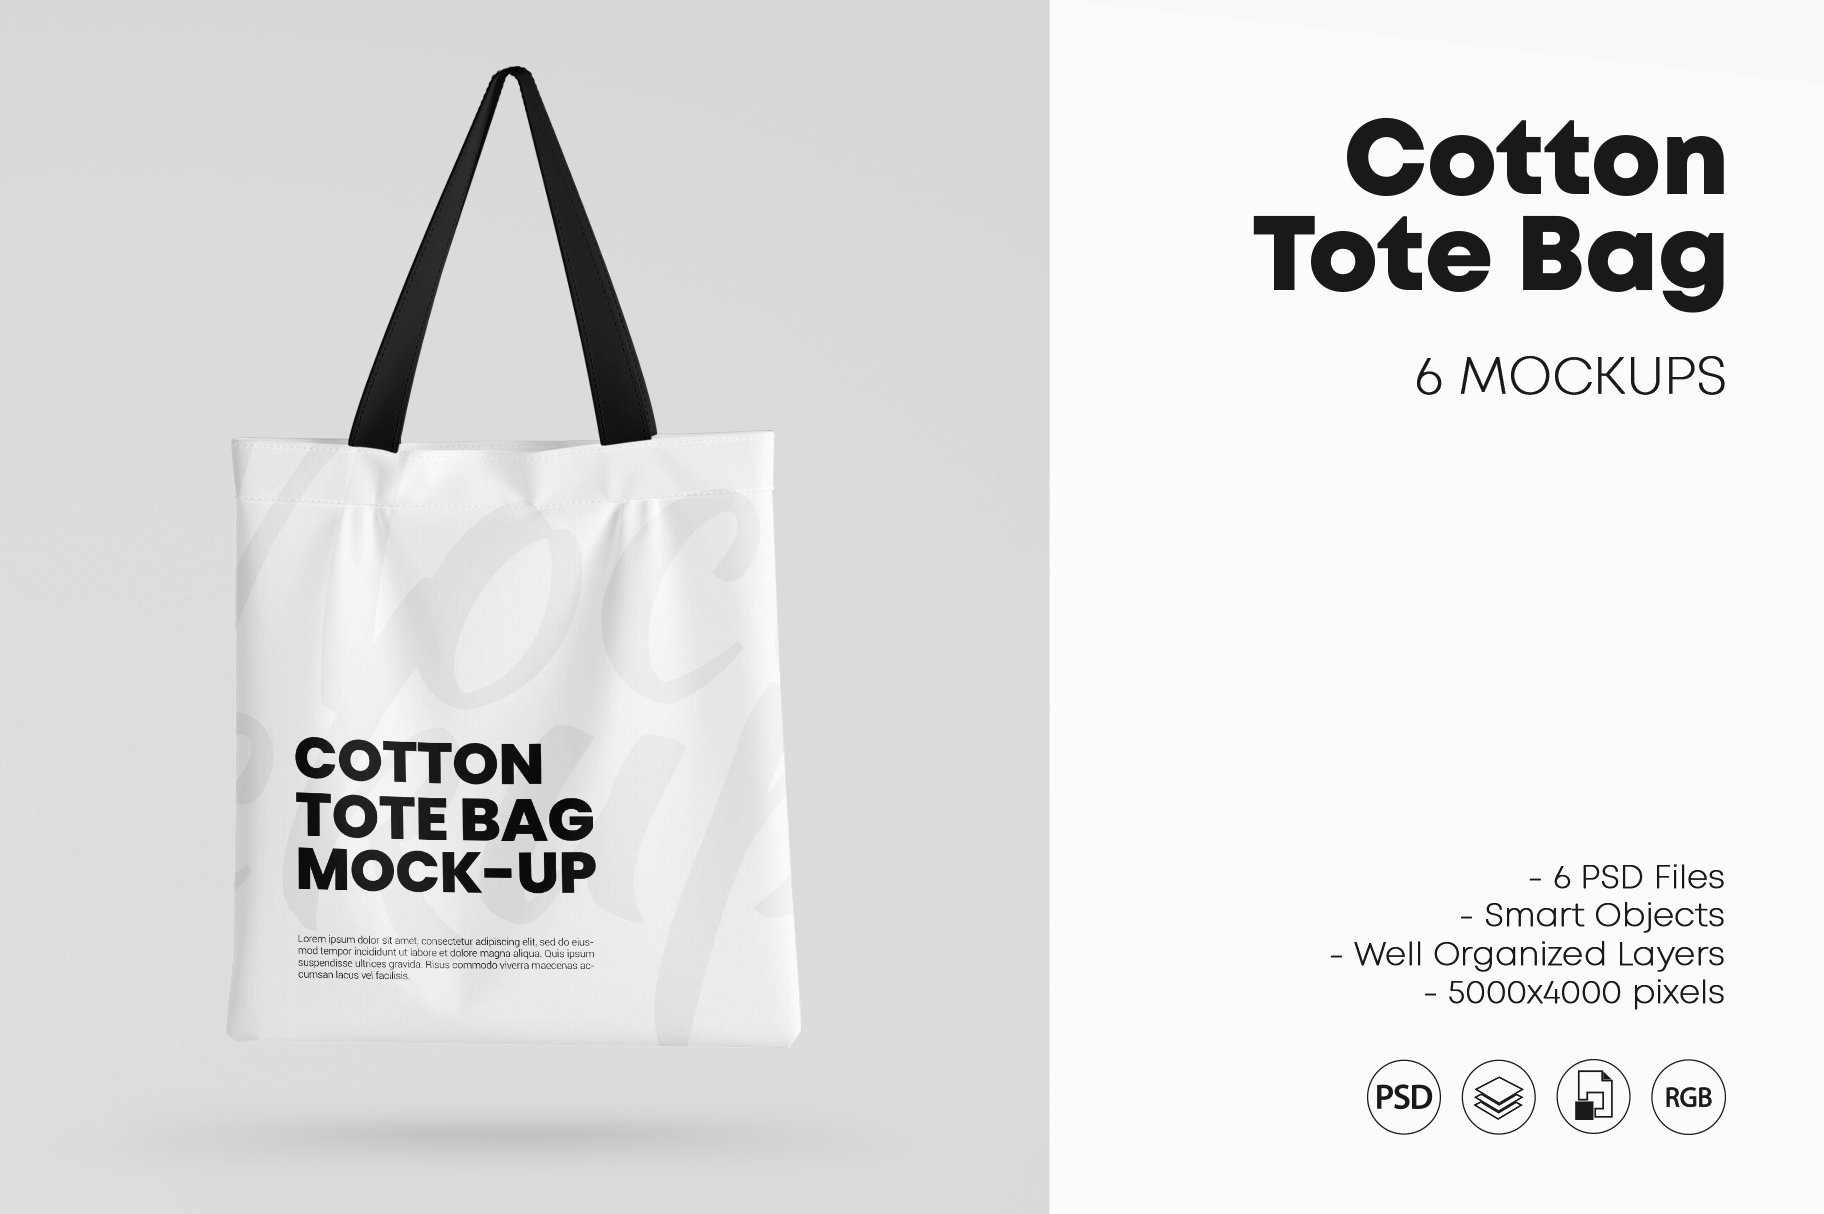 Black Blank Cotton Eco Tote Bag Design Mockup Stock Photo